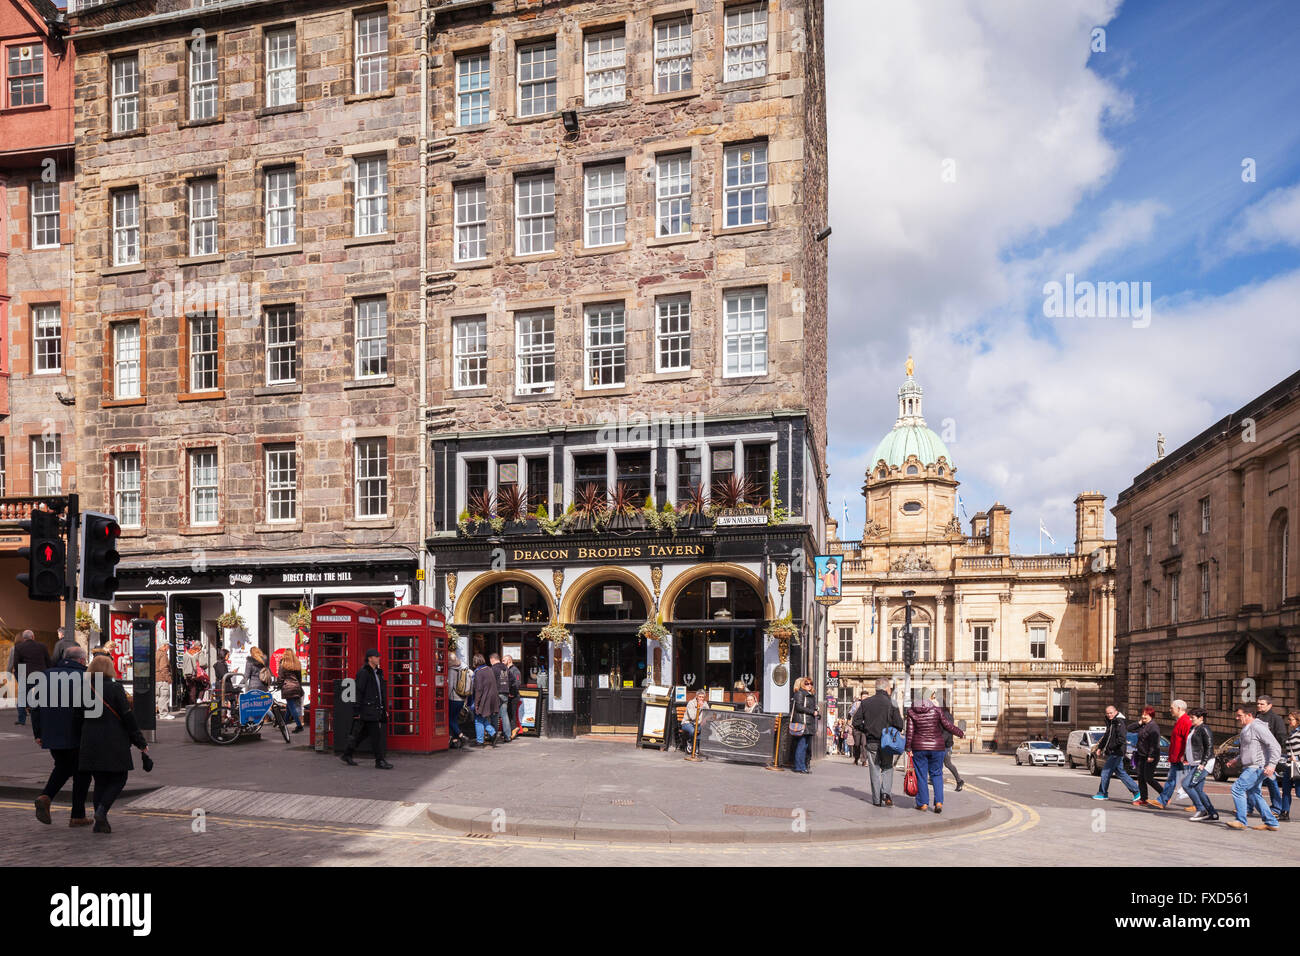 Street scene in the Royal Mile, Edinburgh, with Deacon Brodie's Tavern, Scotland, UK Stock Photo